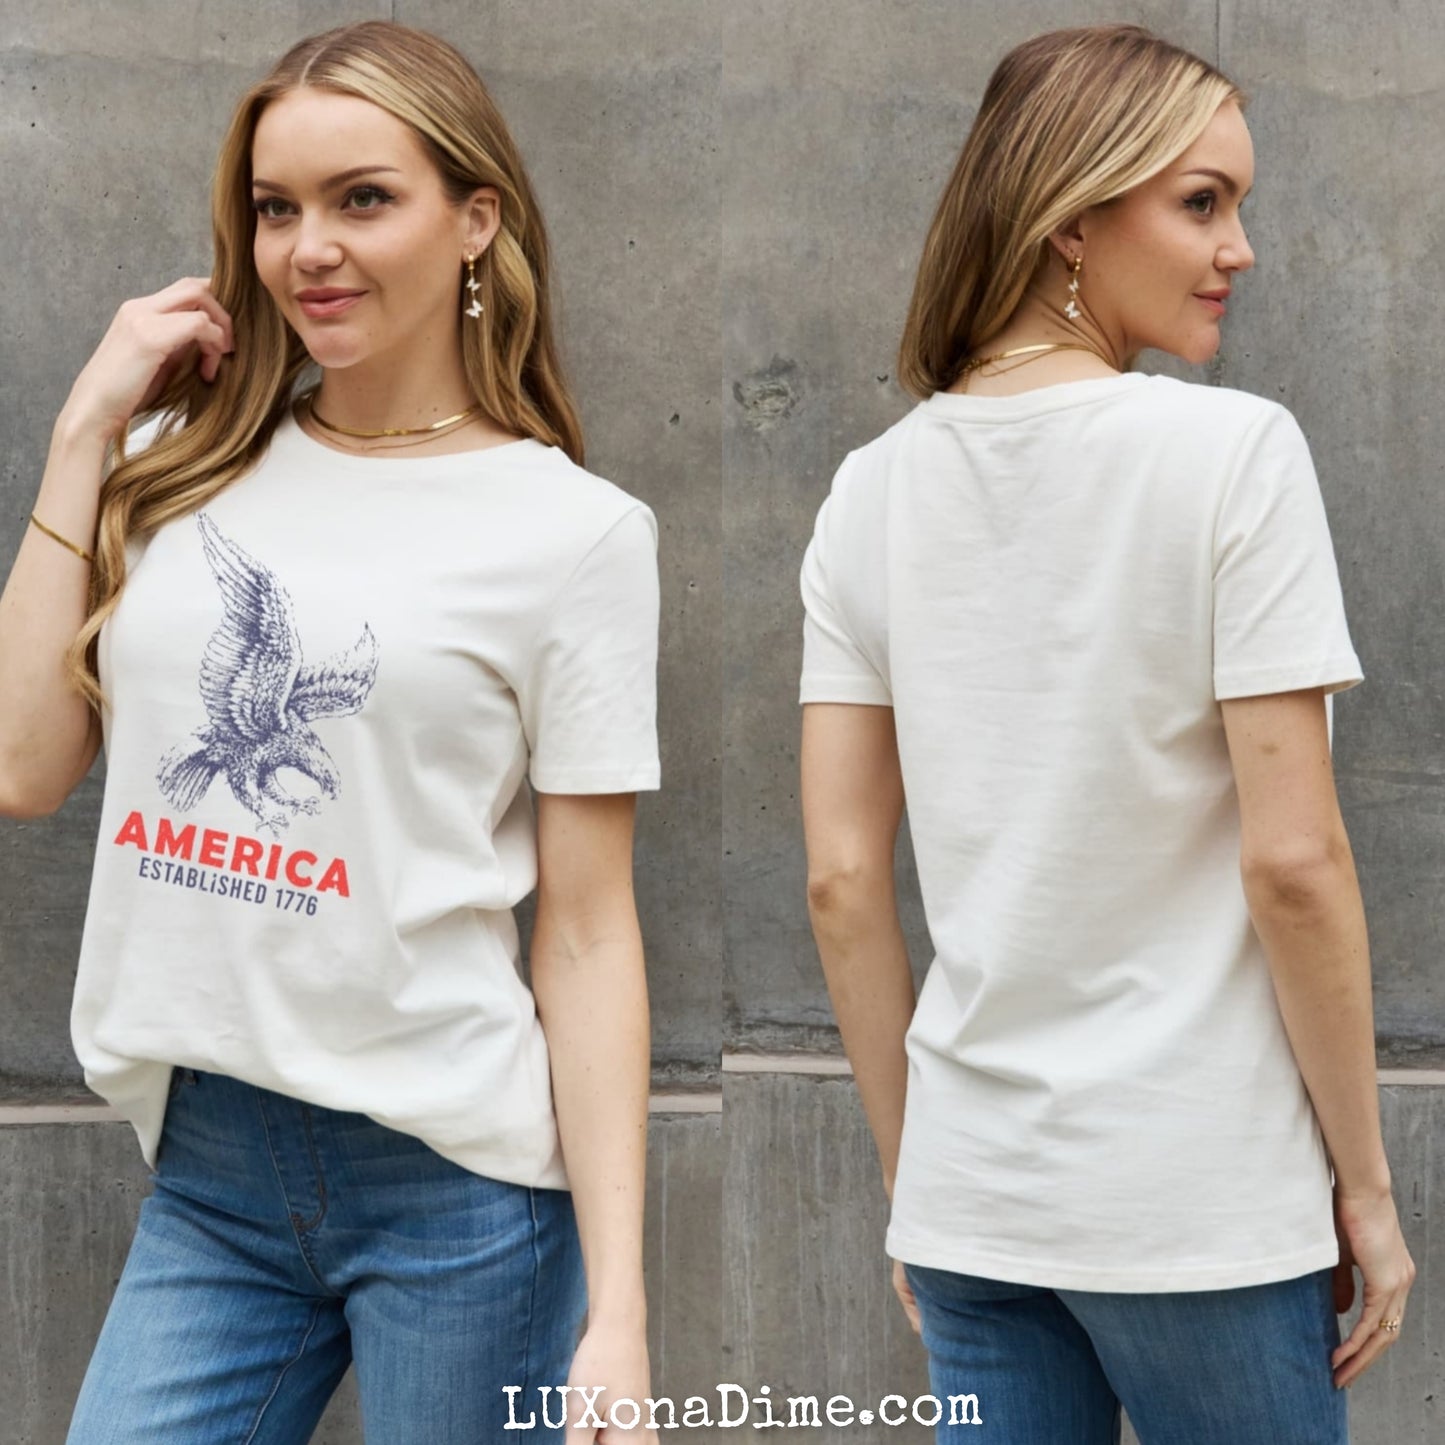 AMERICA ESTABLISHED 1776 Eagle Patriotic USA Graphic 100% Cotton Short-sleeve T-Shirt